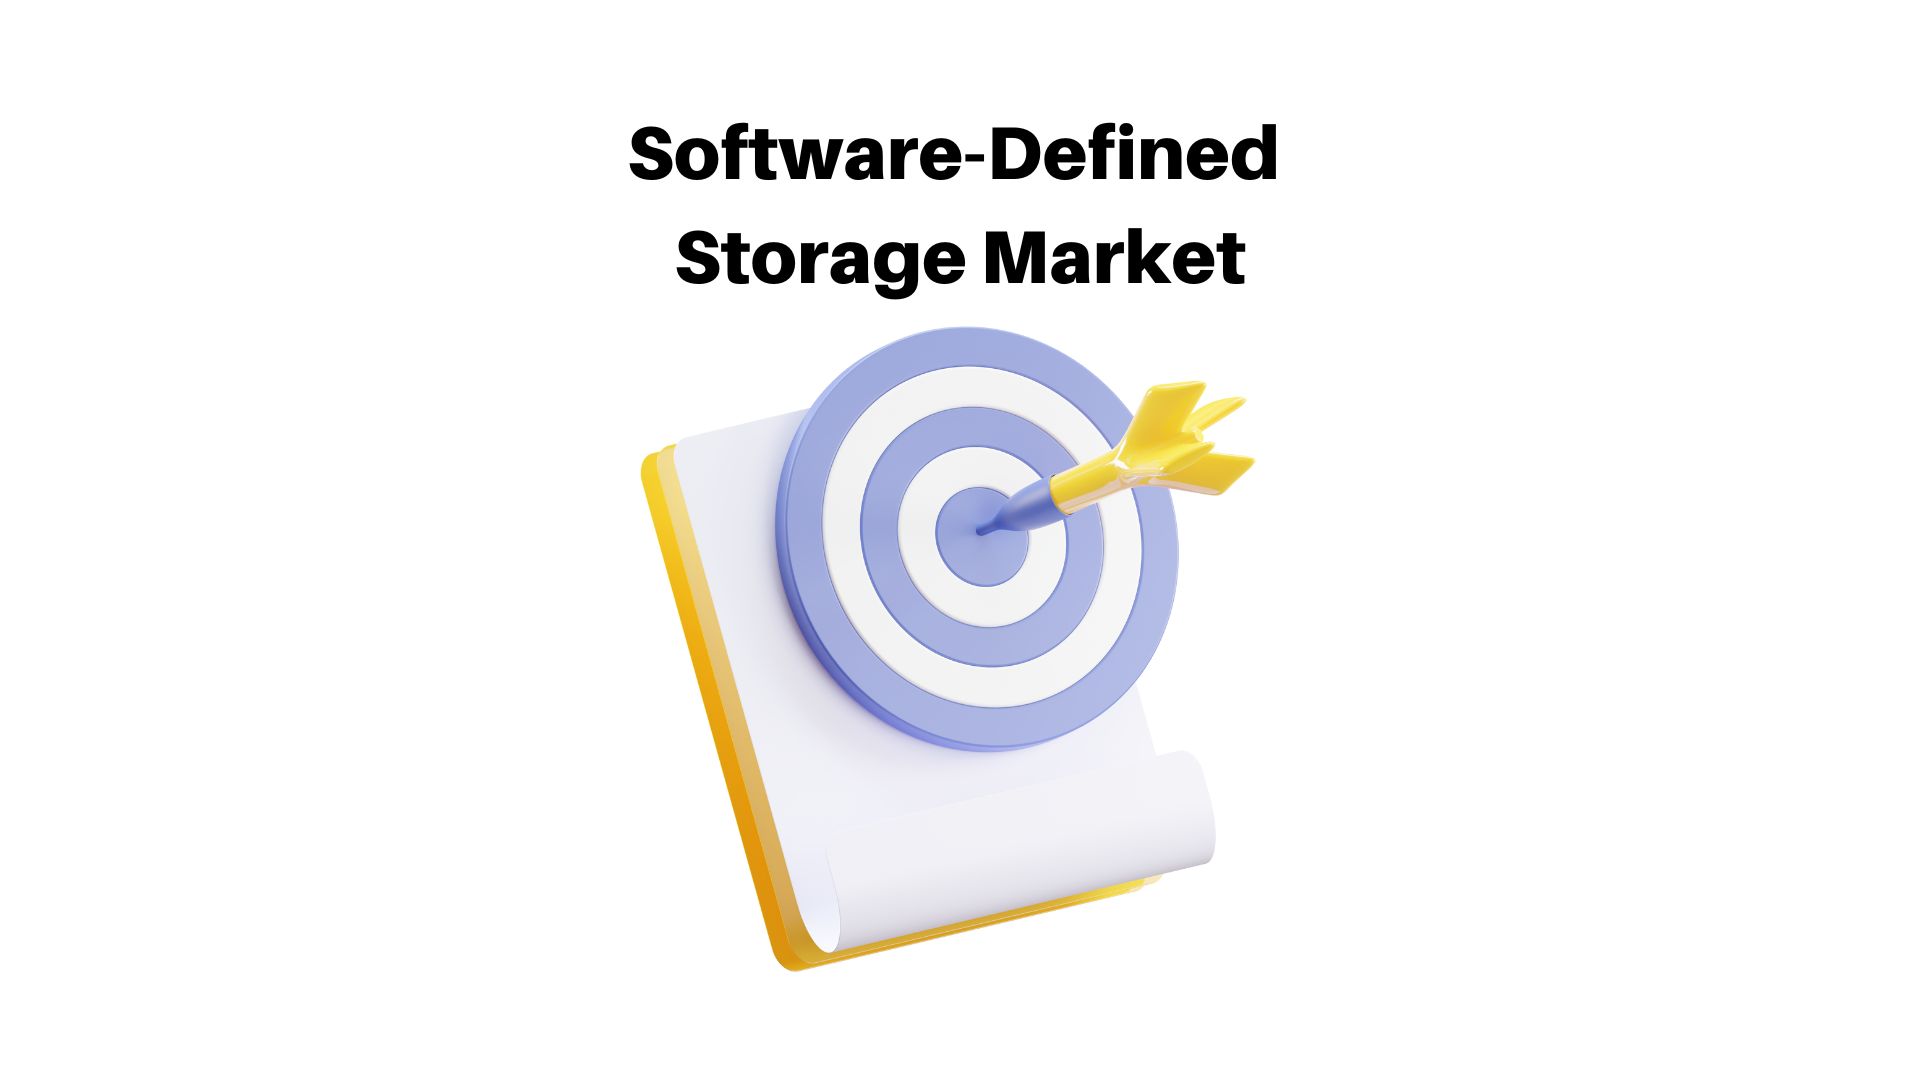 Software-Defined Storage Market Will Hit USD 207.62 Bn By 2033